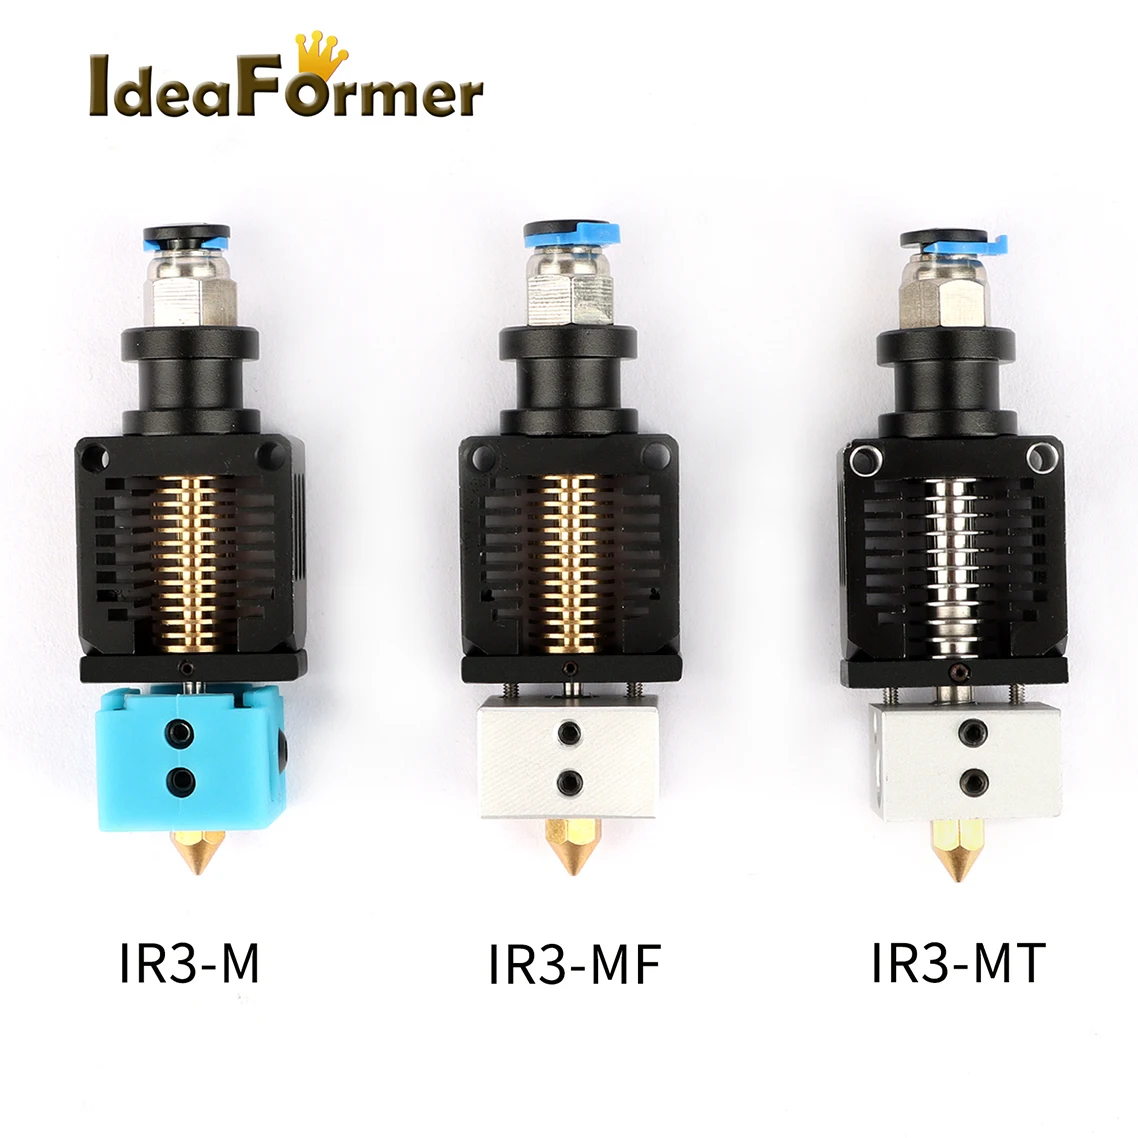 IdeaFormer IR3-MT IR3-MF IR3-MF Hotend Цельнометаллическая/PTFE Горловина с Термозащитой Hotend Для 3D-принтера Ideaformer IR3 & IR3 V1 V5 V6 J-head